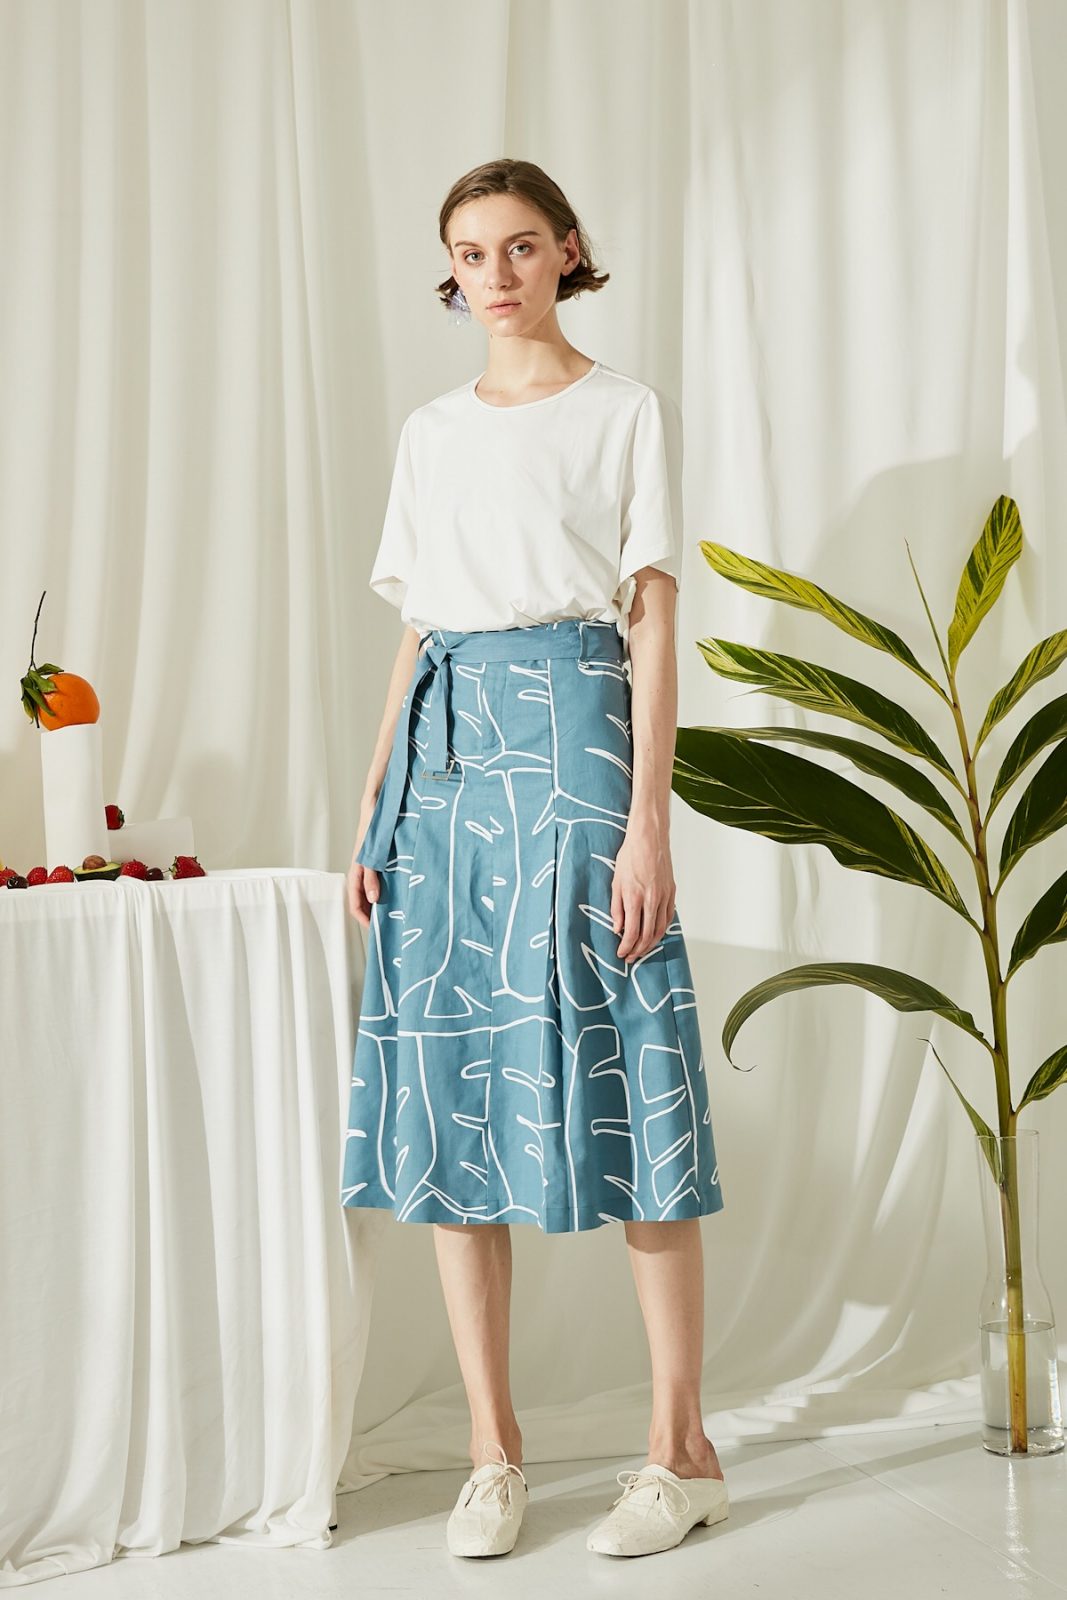 SKYE San Francisco SF ethical modern minimalist quality women clothing fashion Jolee Hand Drawn Print Midi Skirt blue 2